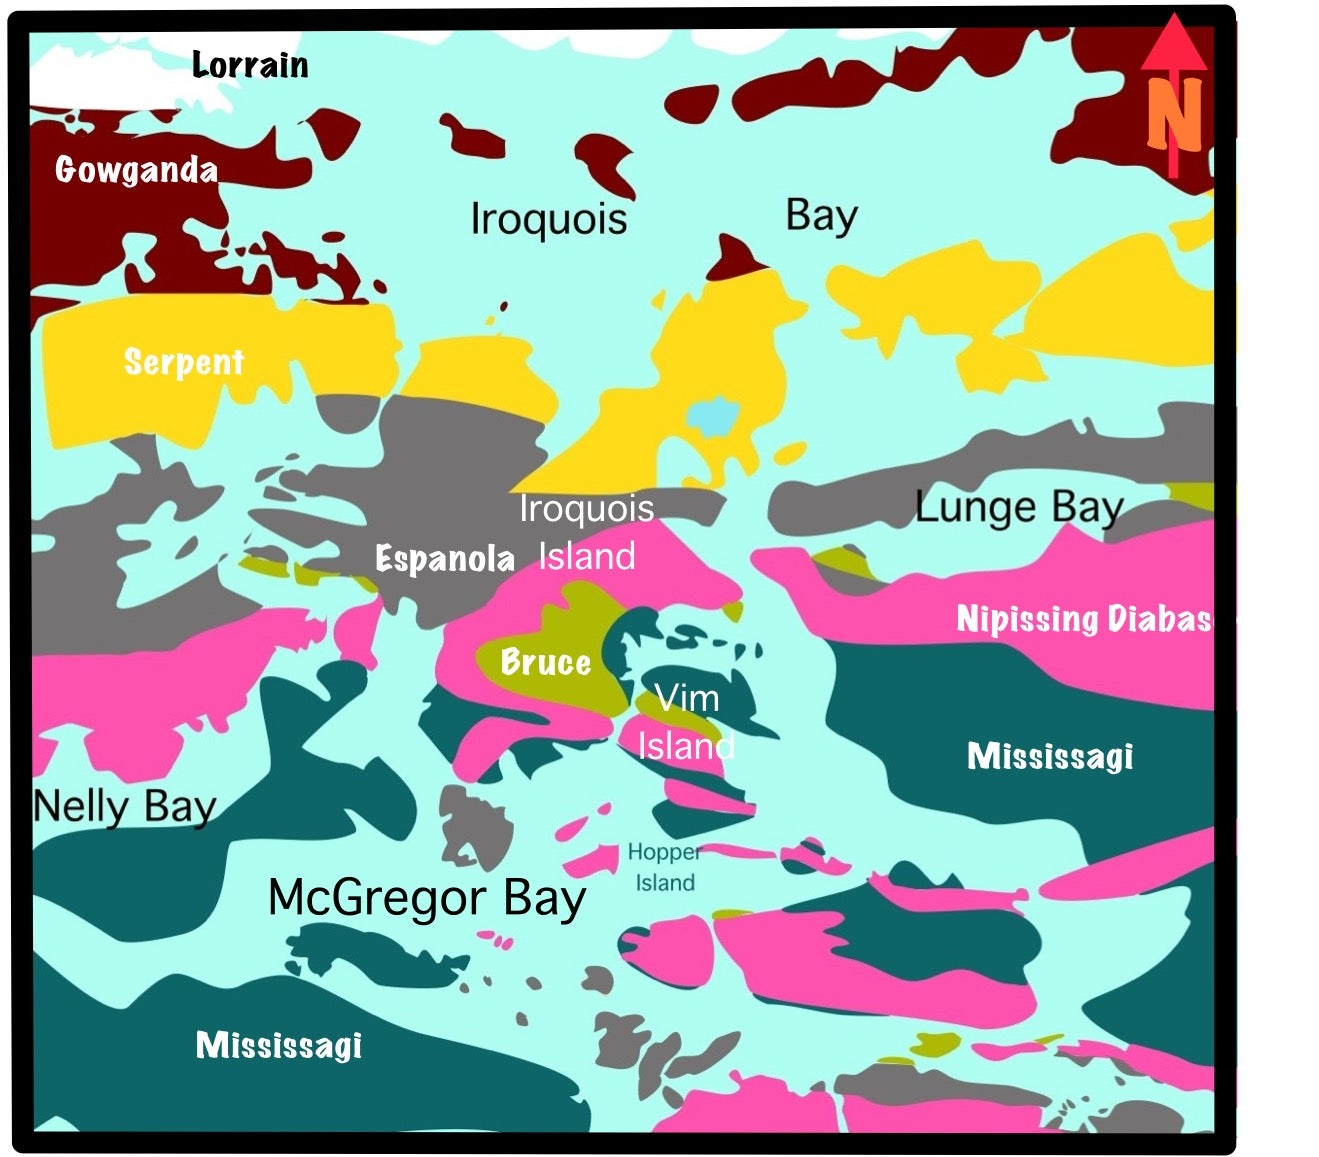 Cartoonish map of McGregor Bay area.